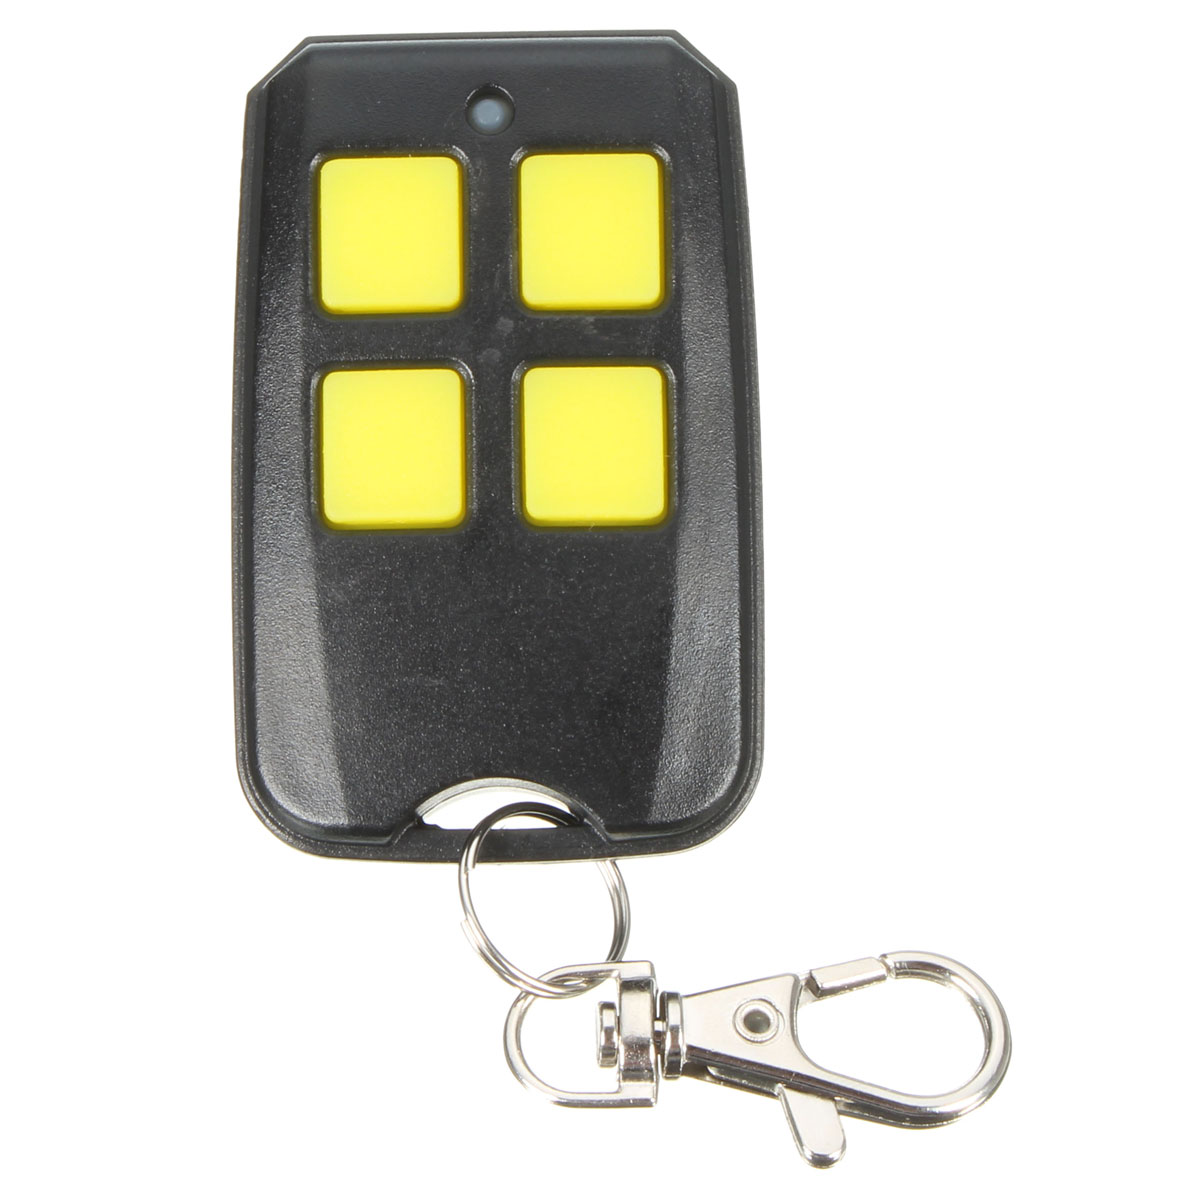 

4 Button 433.92MHz Garage Gate Key Remote Control For Seip SKR433-1 SKRJ433 TM